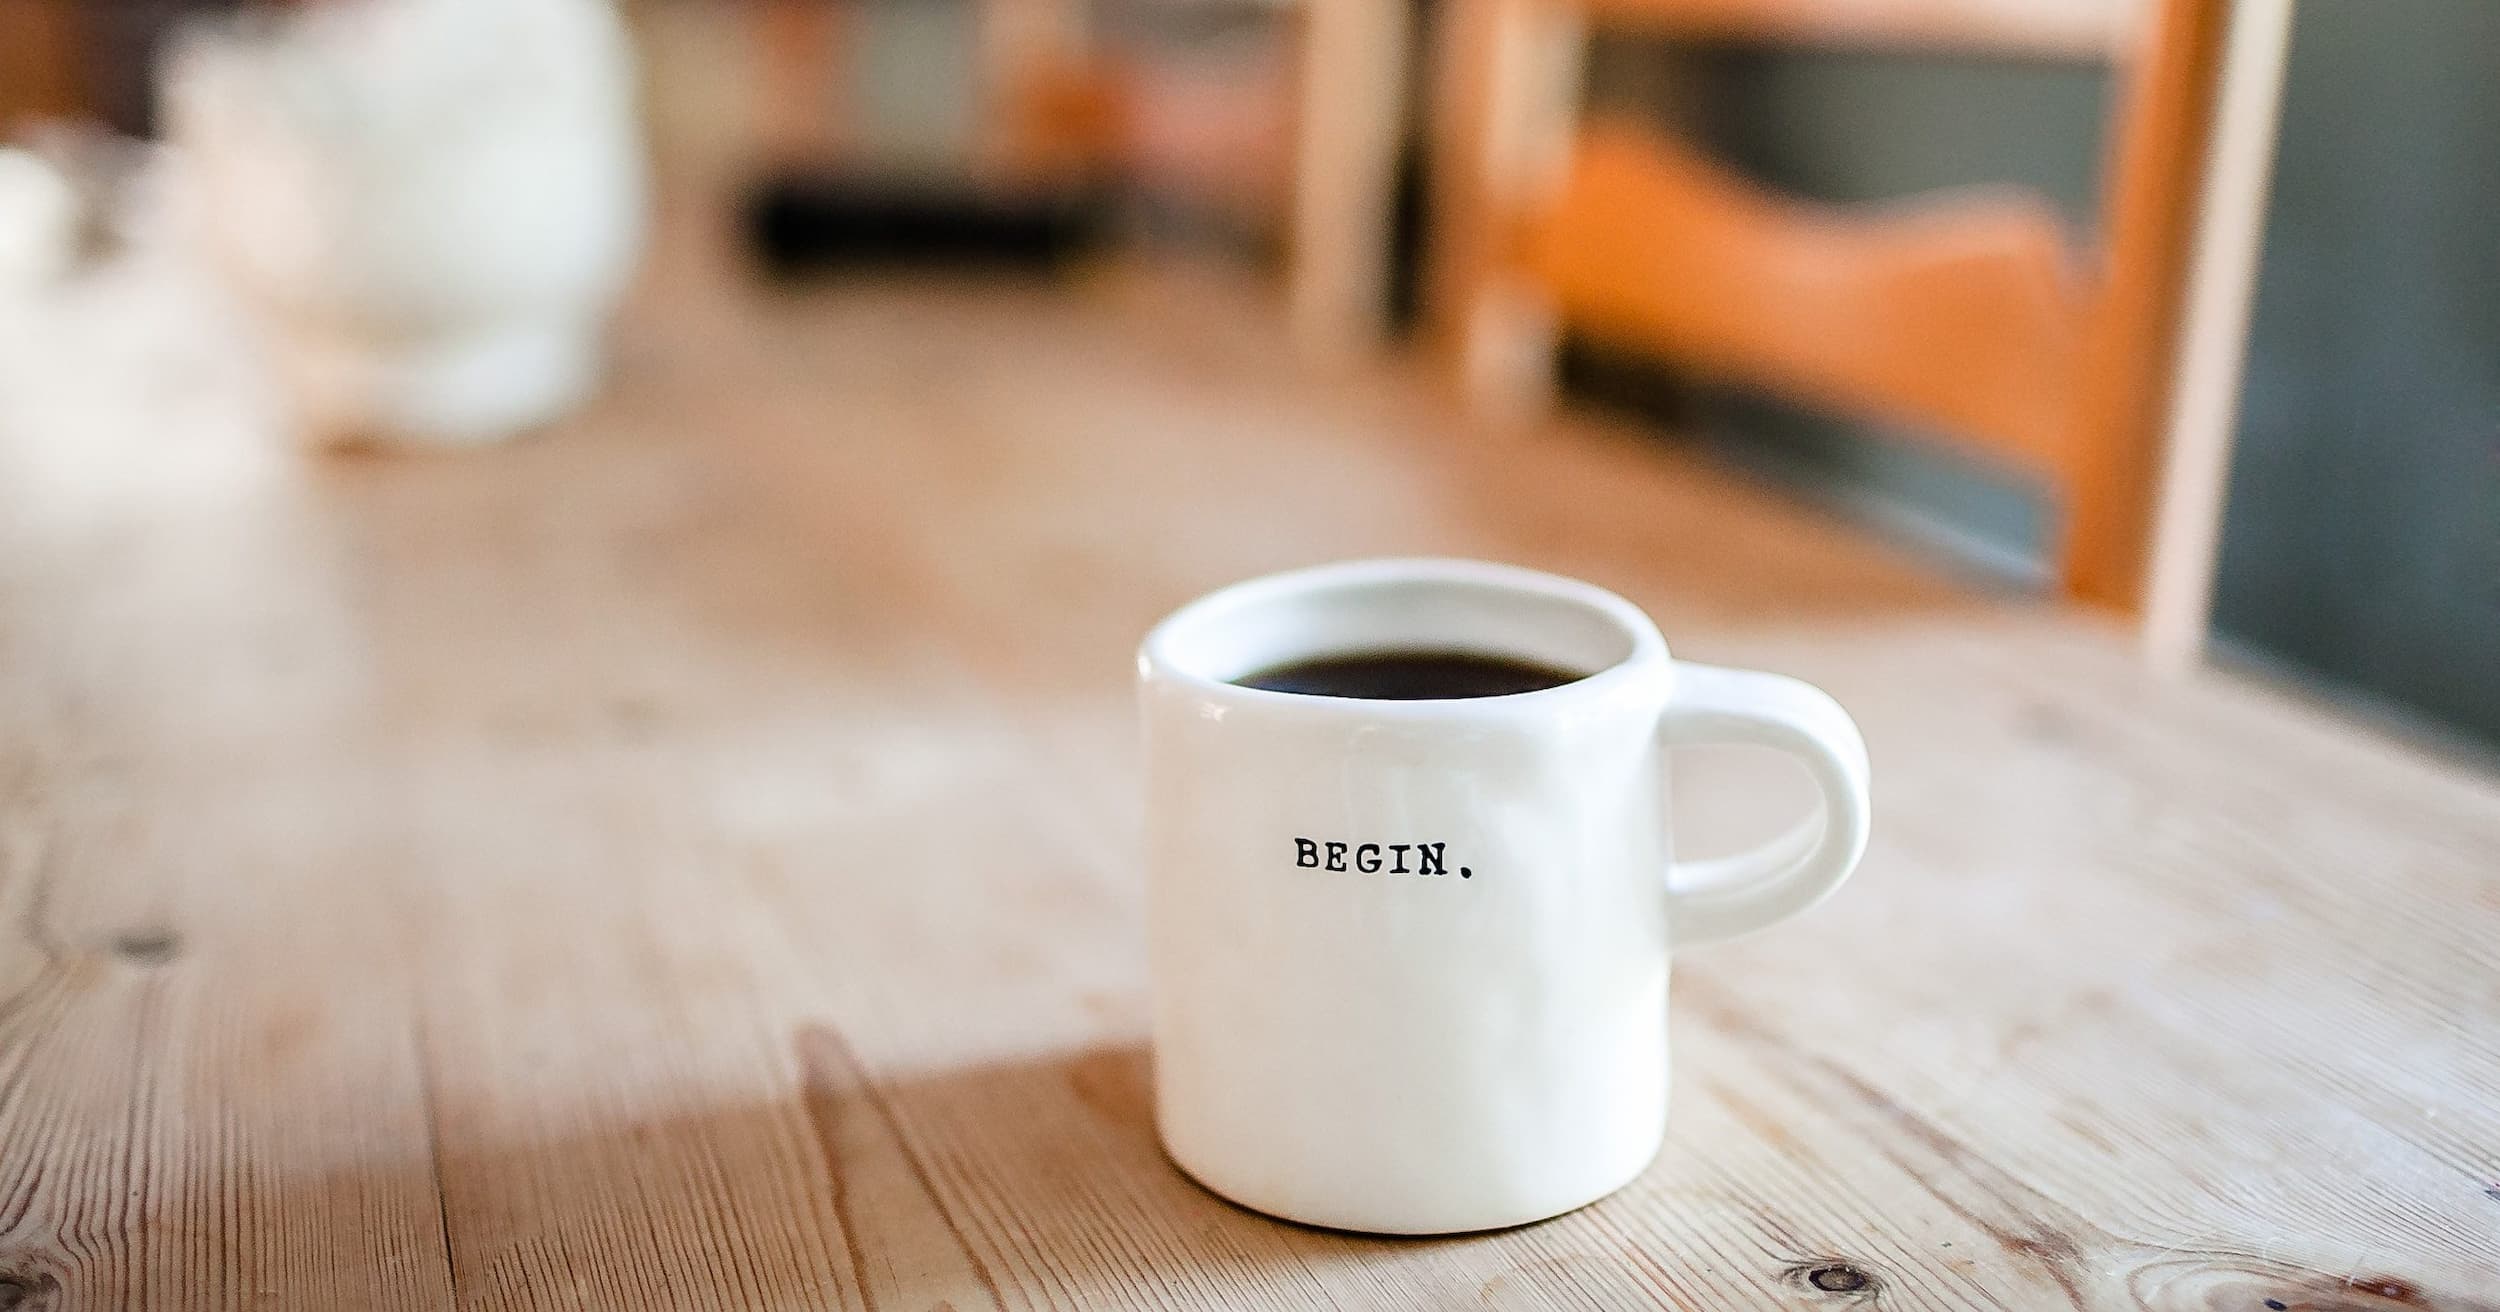 begin coffee mug